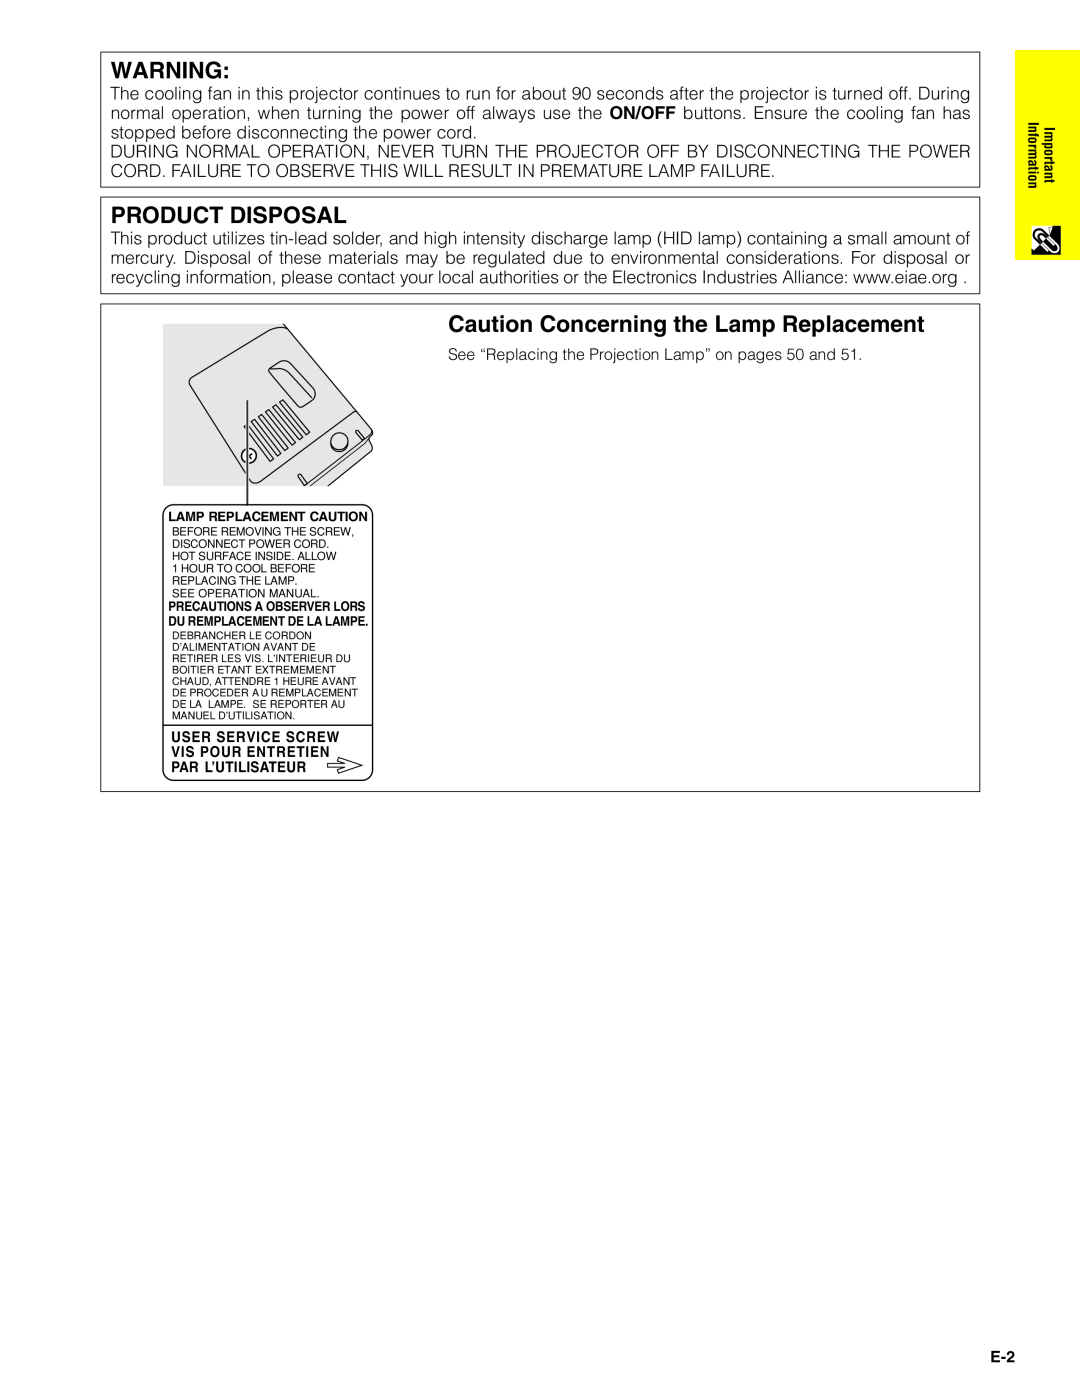 Sharp XG-C40XU operation manual Product Disposal, Caution Concerning the Lamp Replacement 